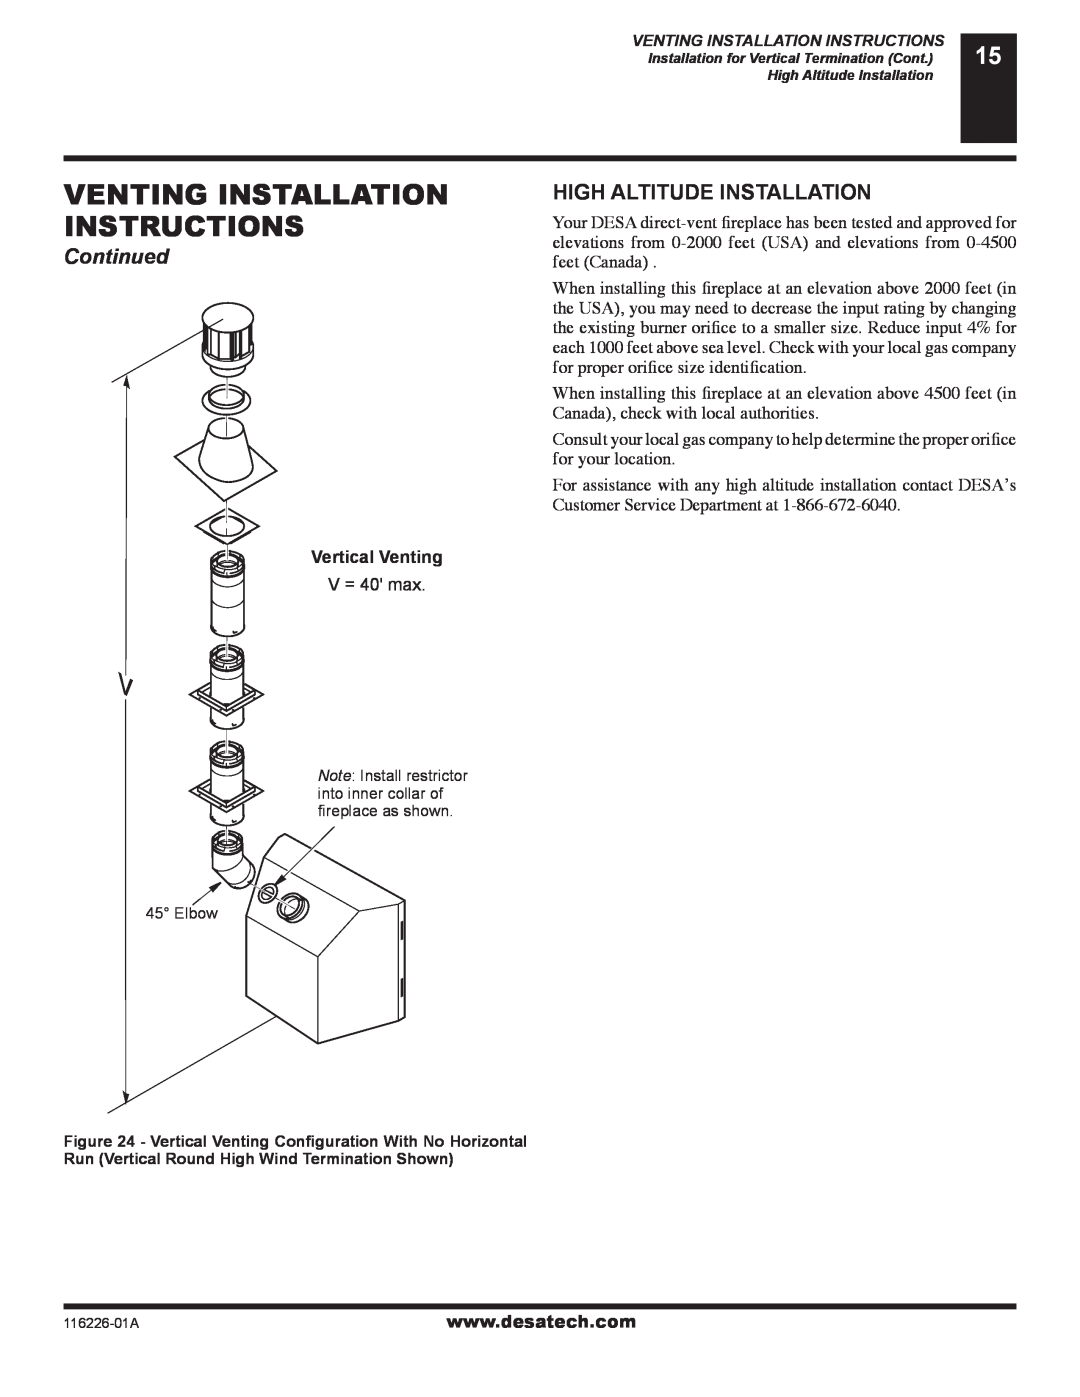 Desa (V)KC36P, (V)KC36N High Altitude Installation, Venting Installation Instructions, Continued, Vertical Venting 